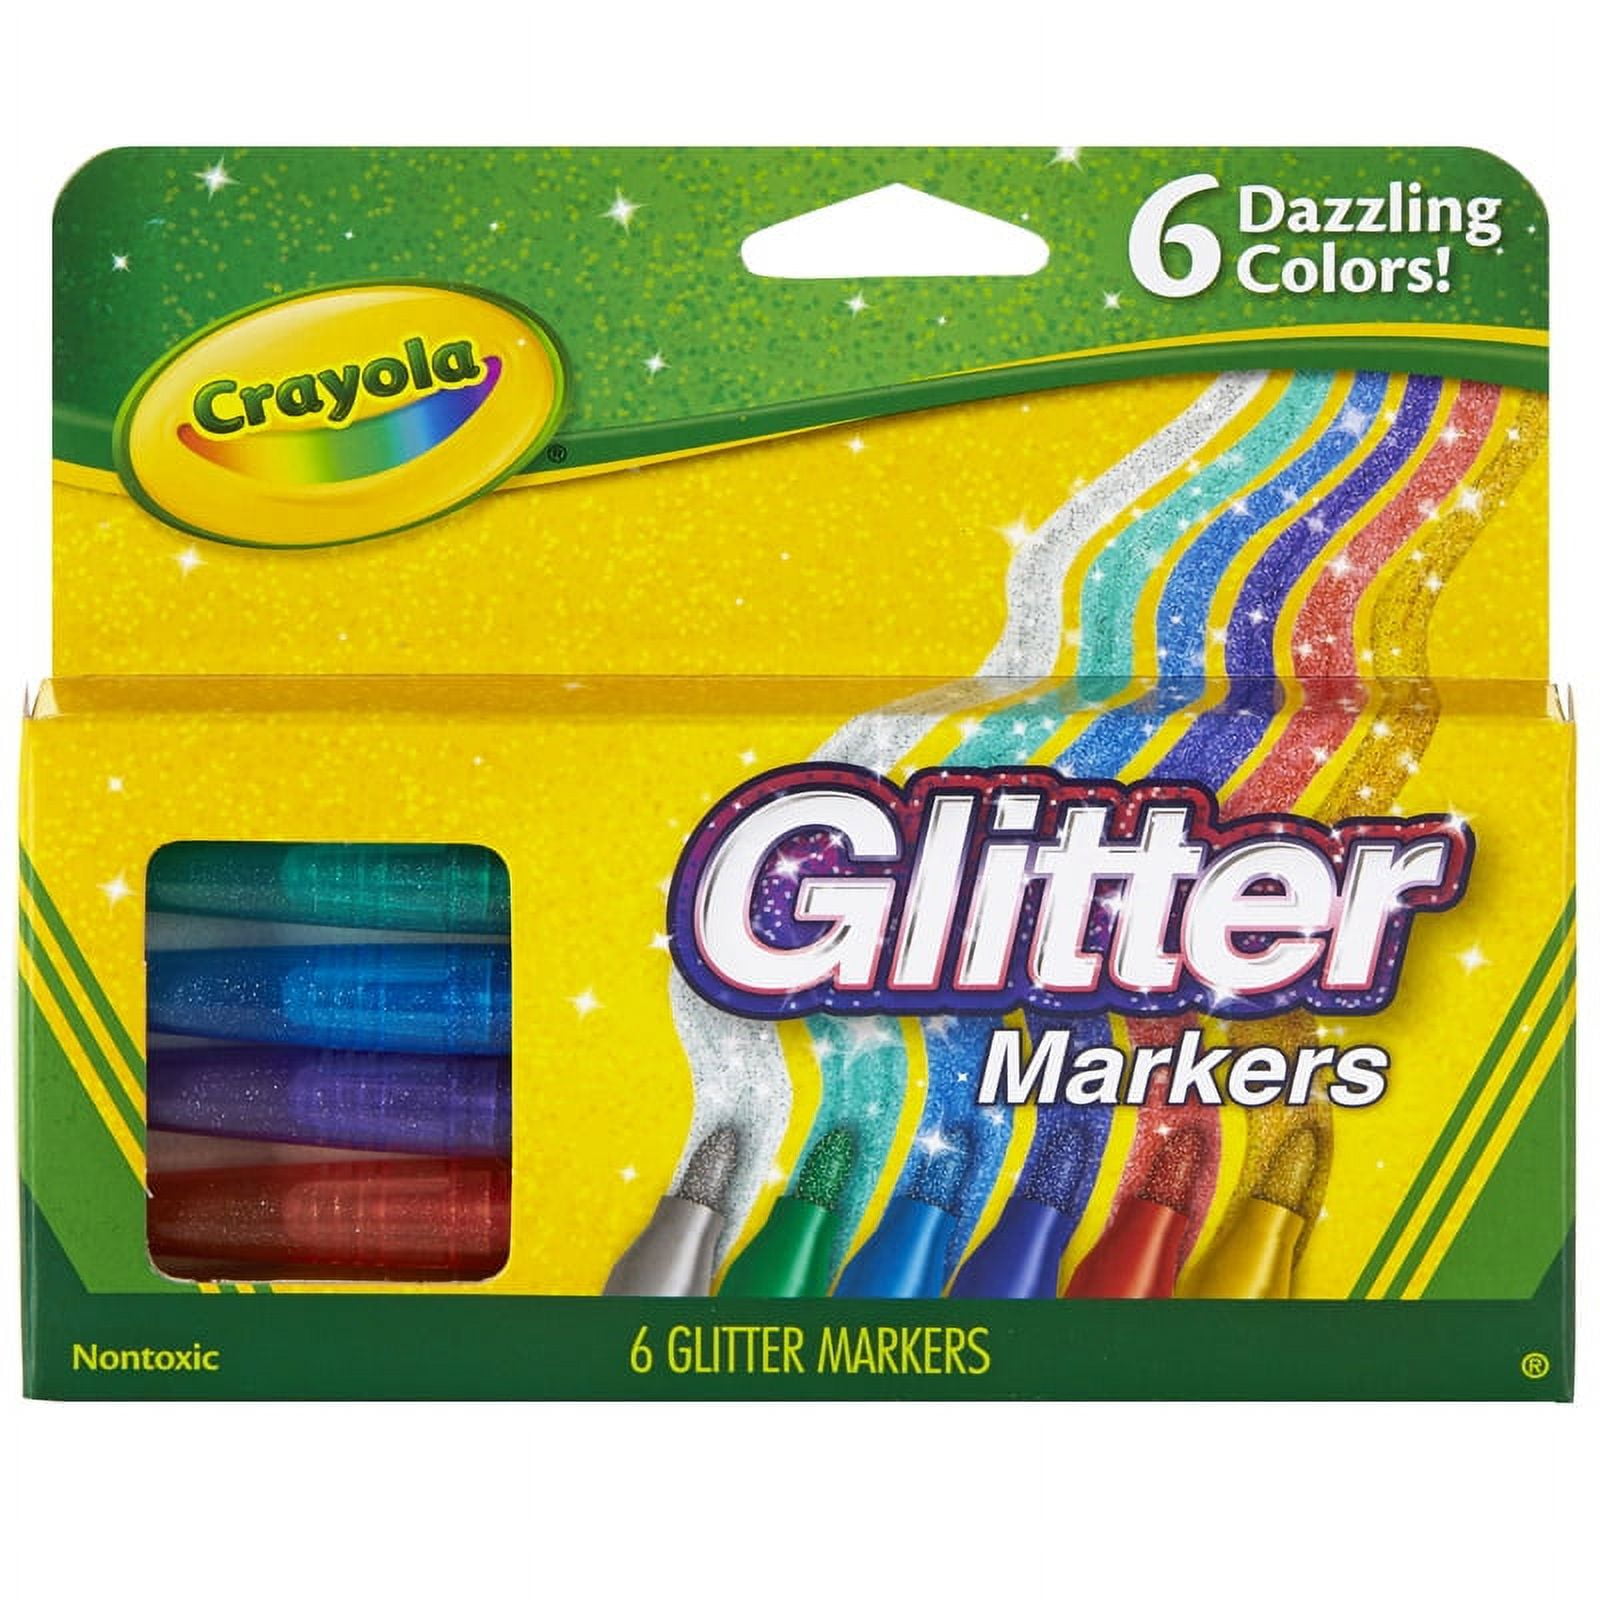 Glokers Jumbo Washable Dot Markers for Kids (10 Colors) Washable, No Mess Preschool Daub Tubes - Children Easy-Grip Art Dobber Dabbers - Great for